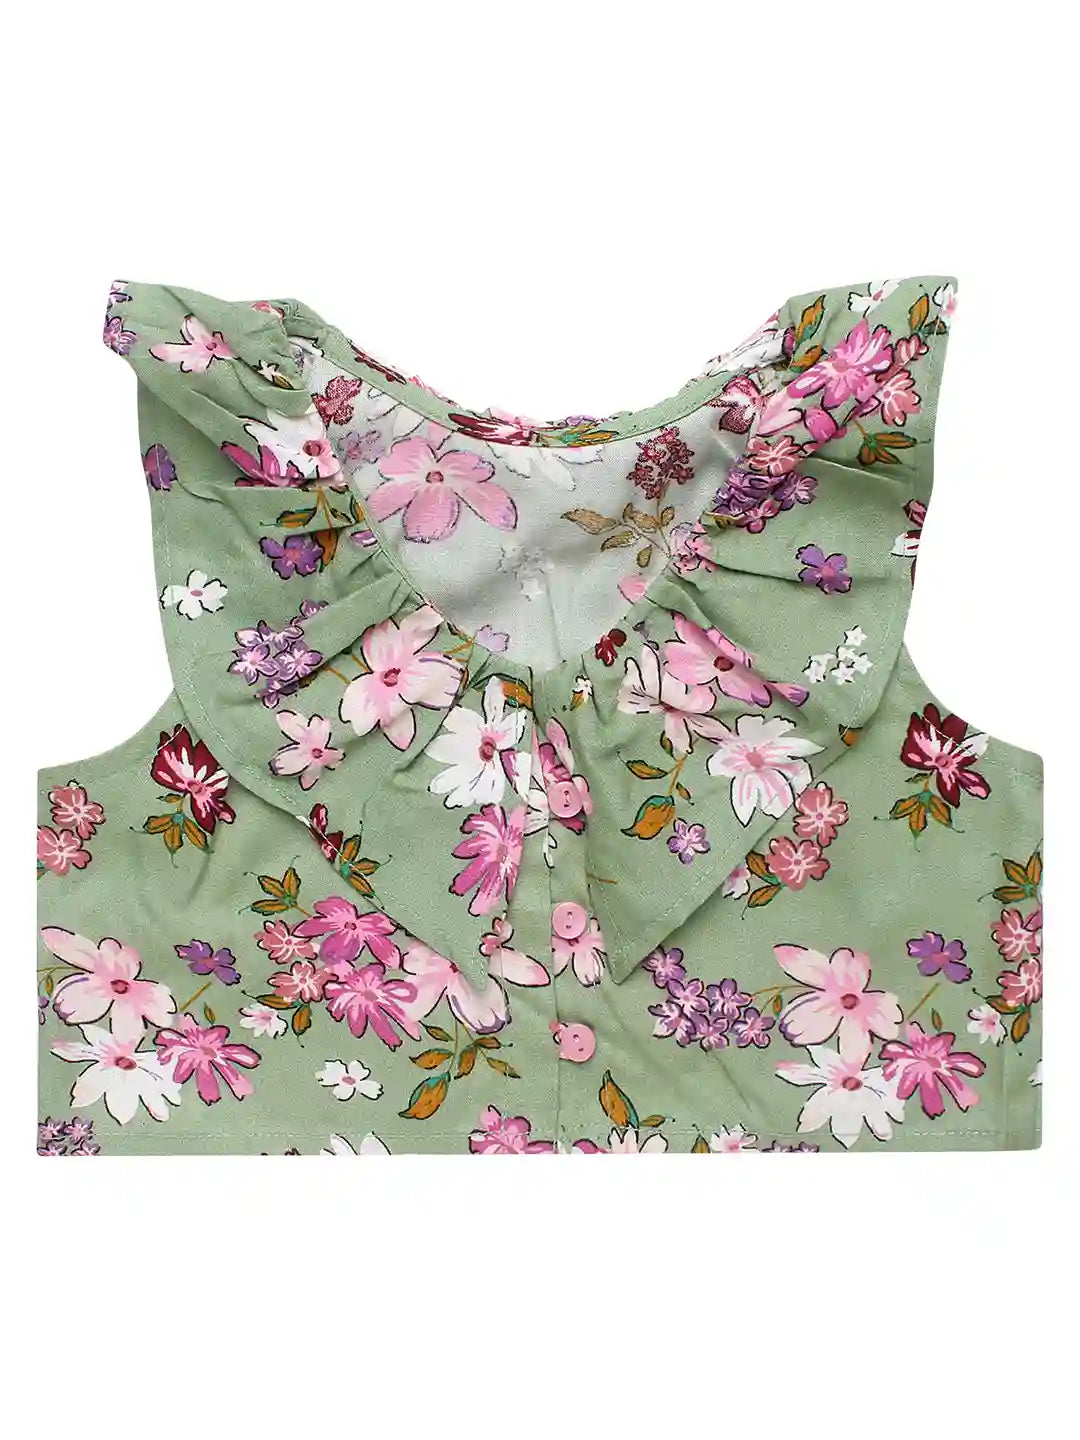 Girls Crop Top & Trouser Set, Floral Print, Green Colour